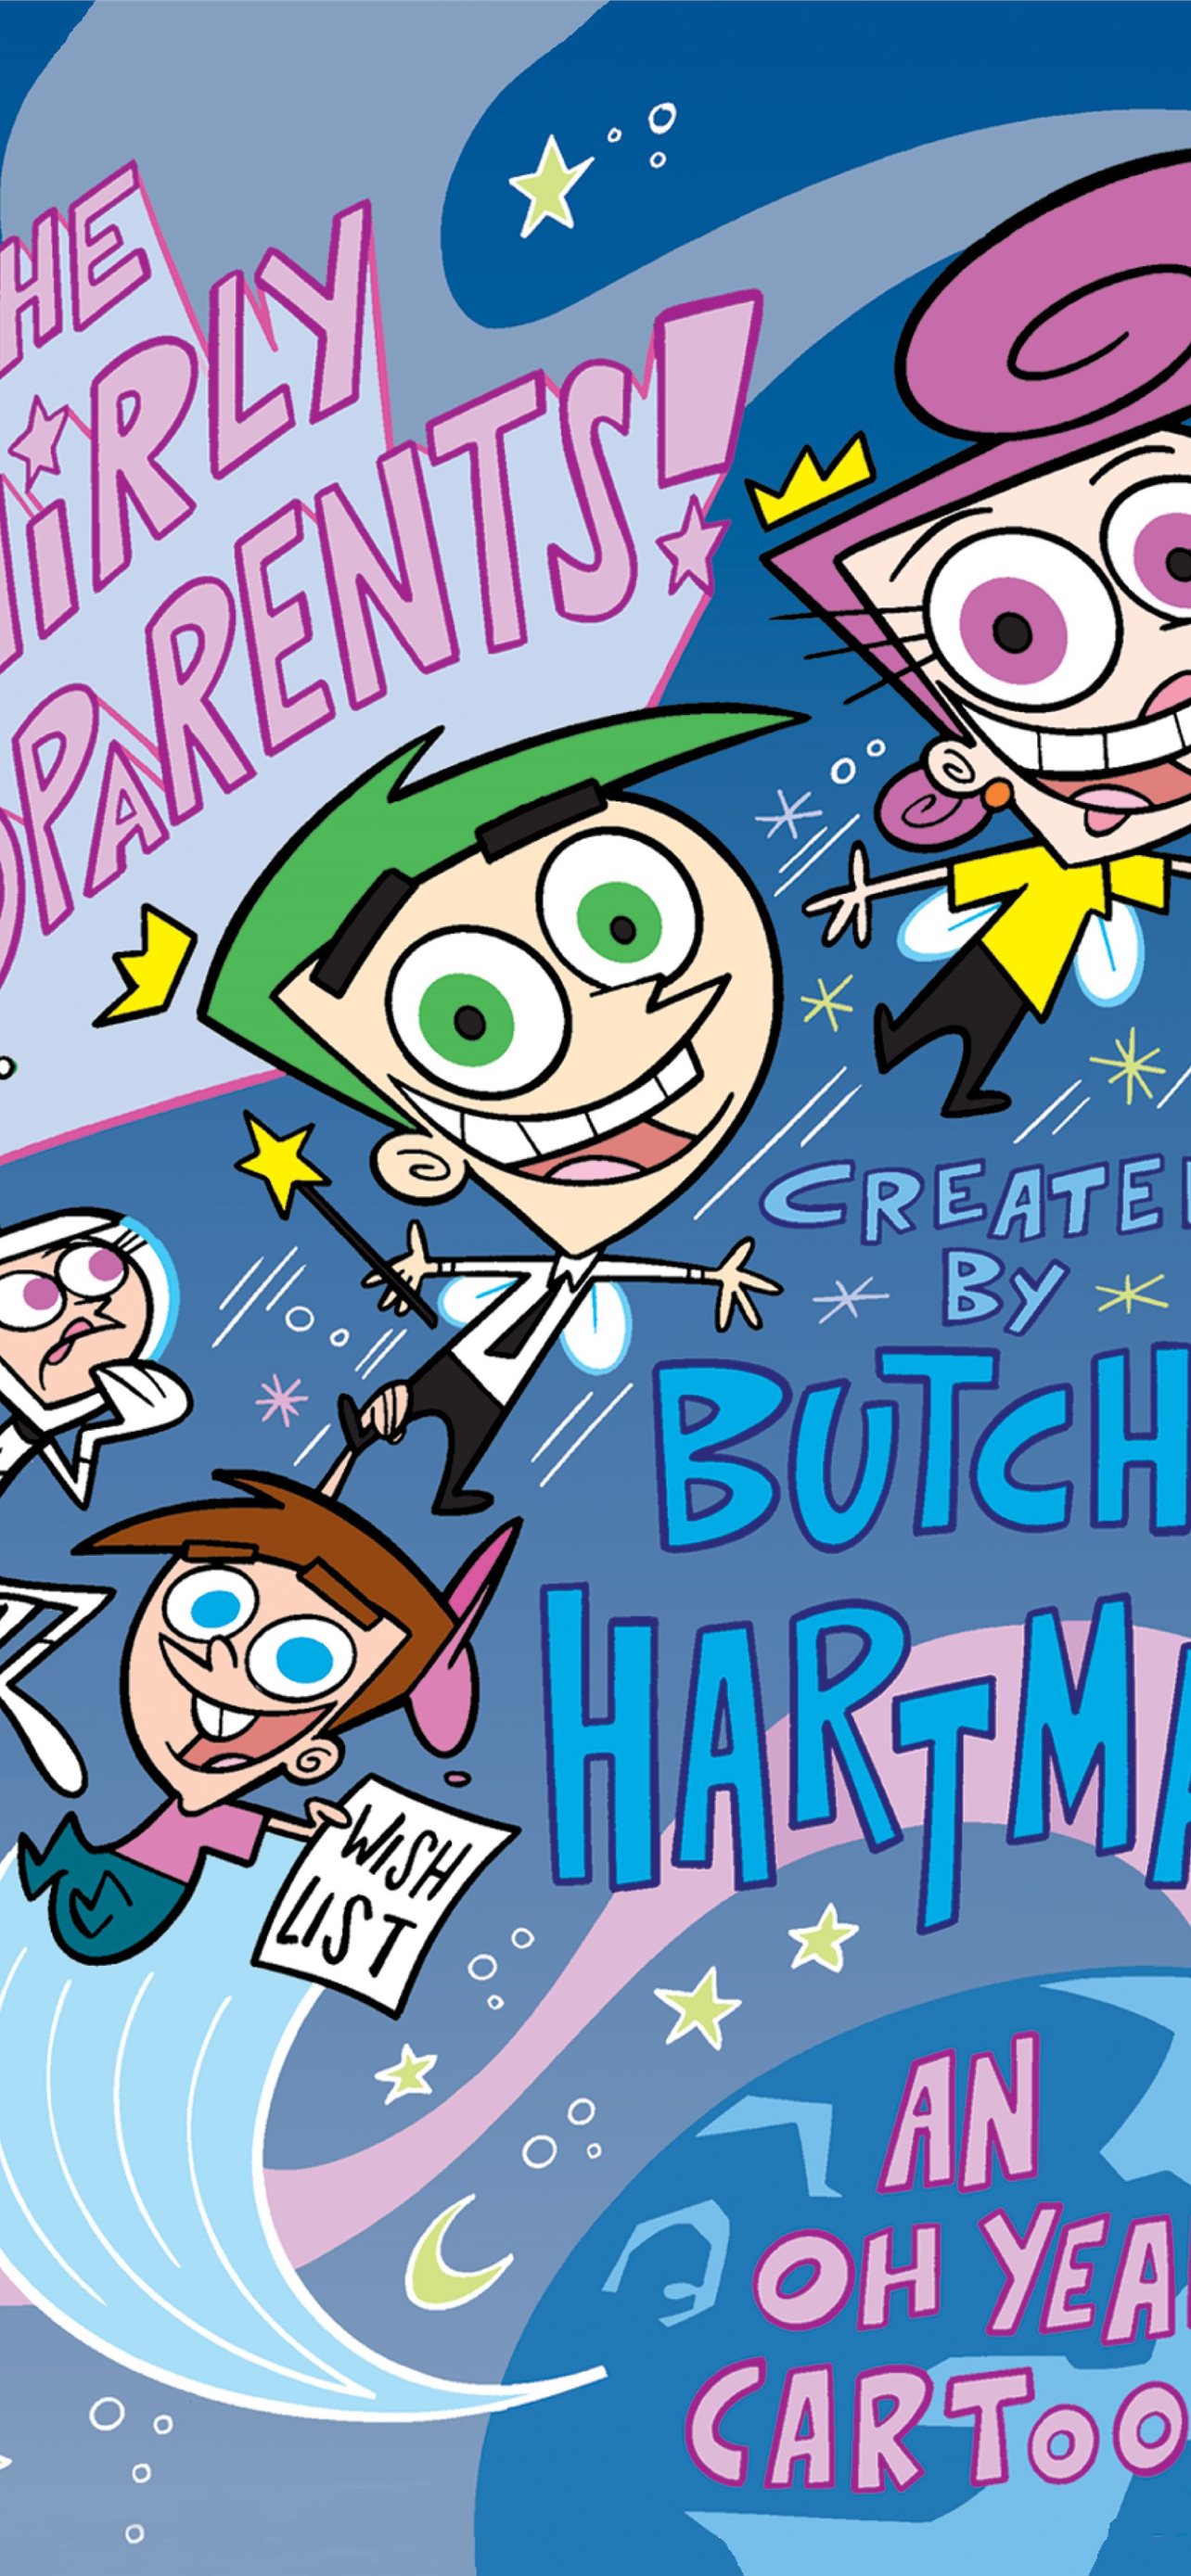 Old Cartoons On Nickelodeon Wallpaper Characters  फट शयर